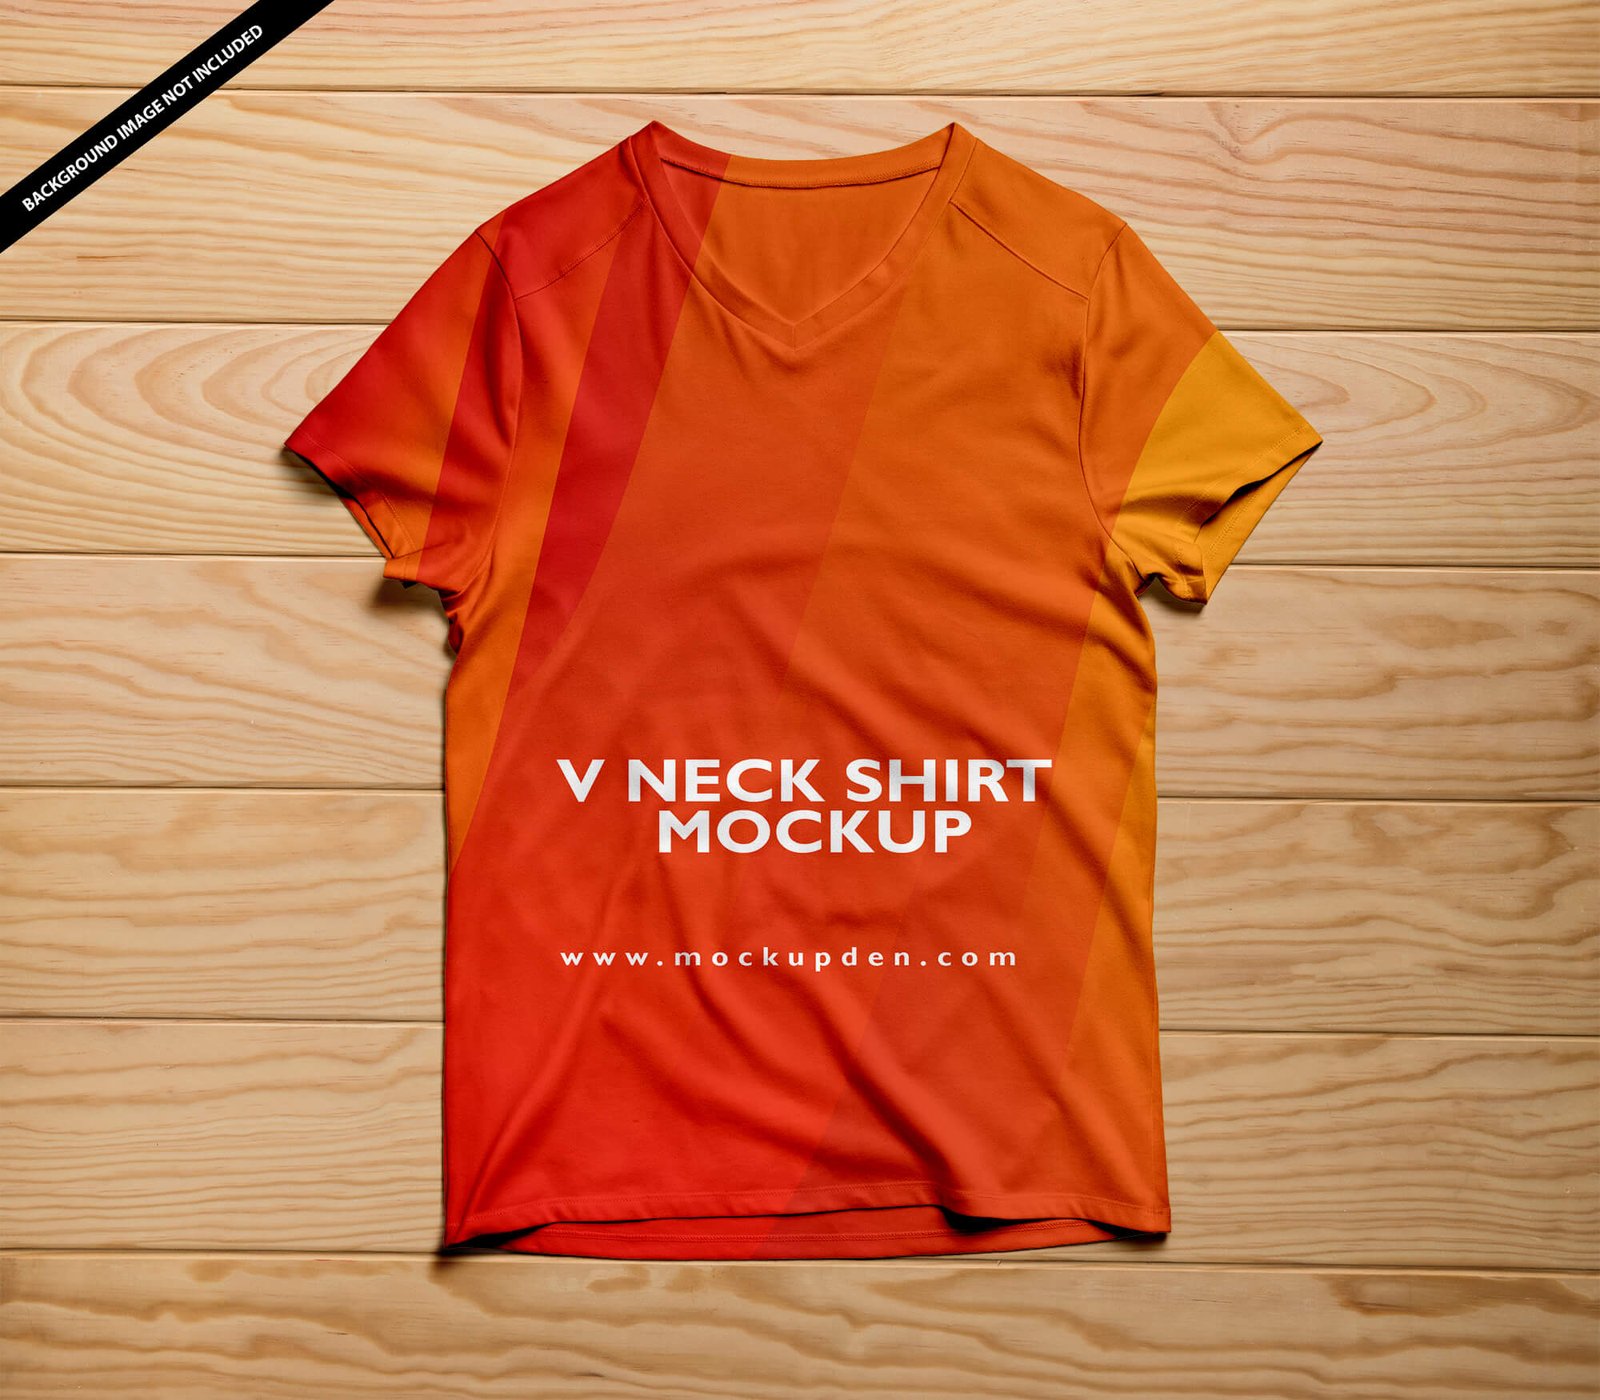 Free V Neck T Shirt Mockup PSD Template Mockup Den